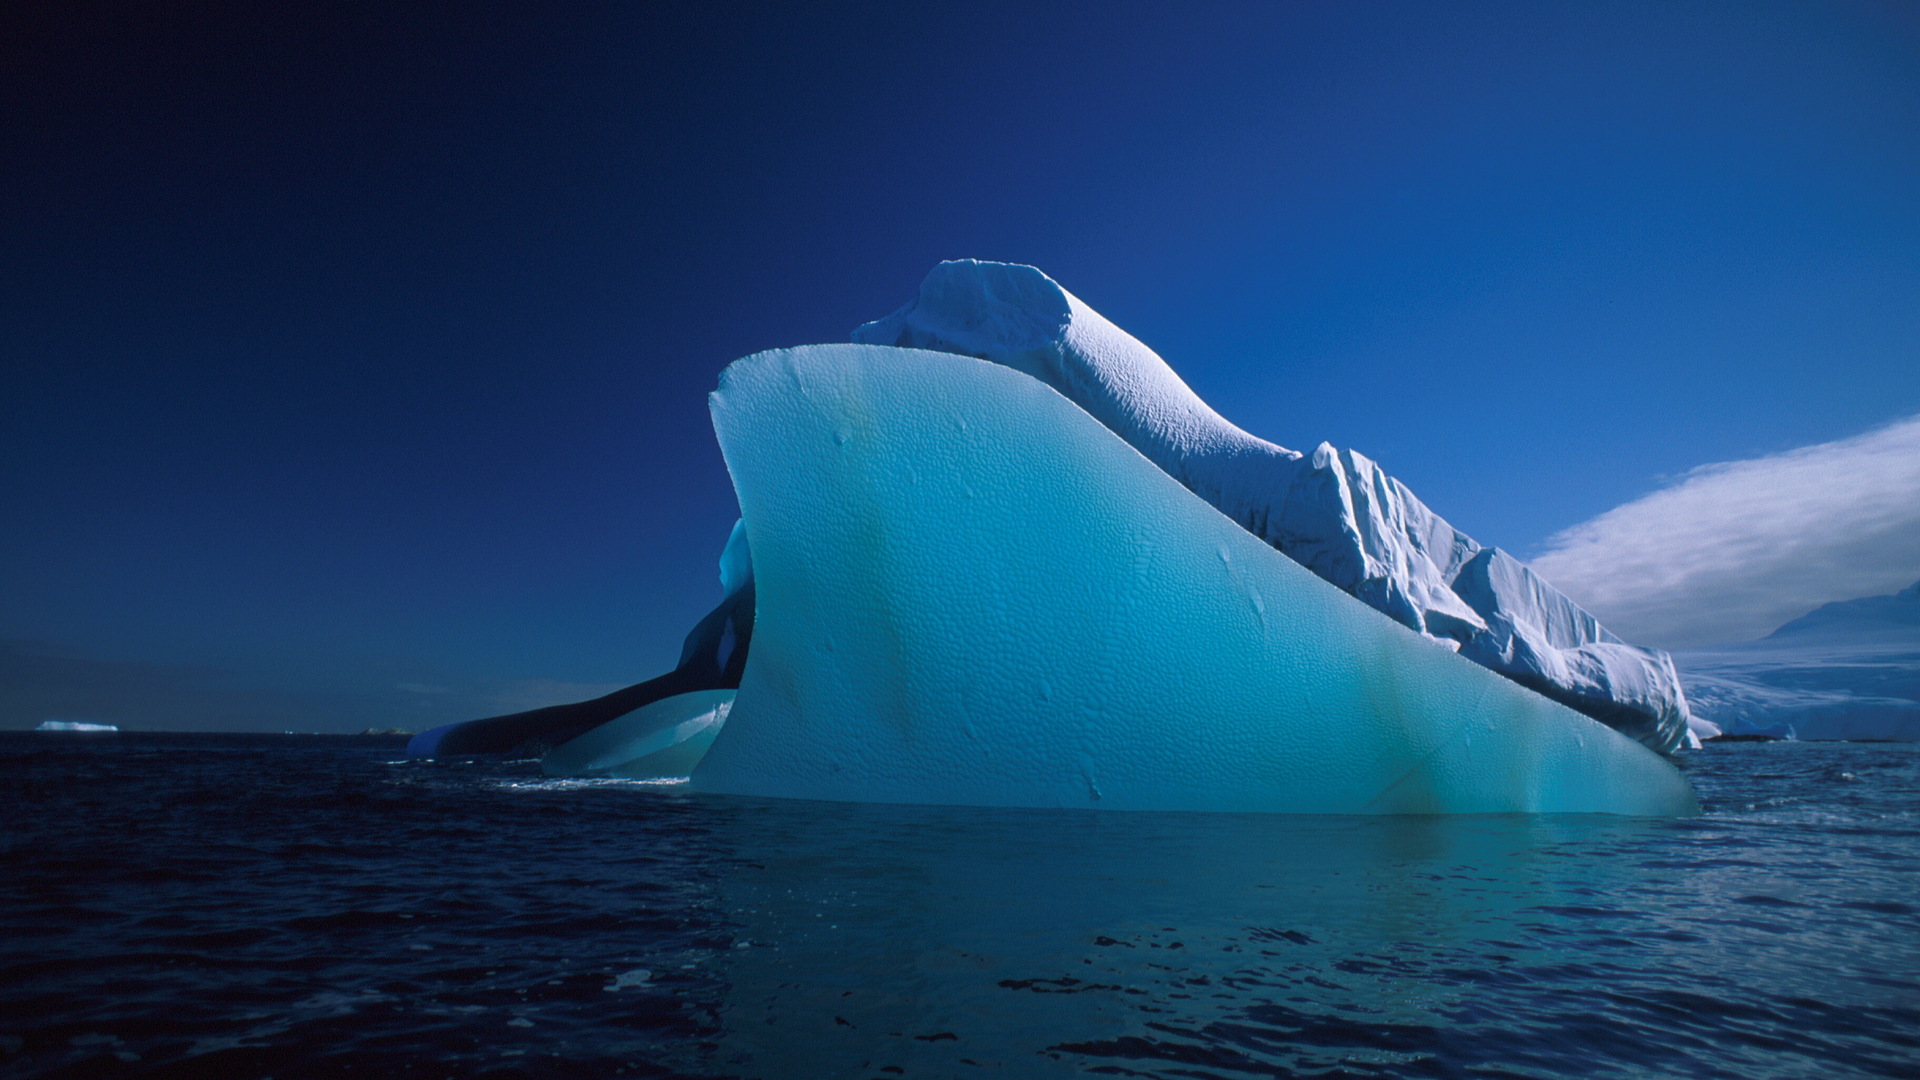 fond d'écran iceberg hd,iceberg,la glace,océan,océan arctique,glacier